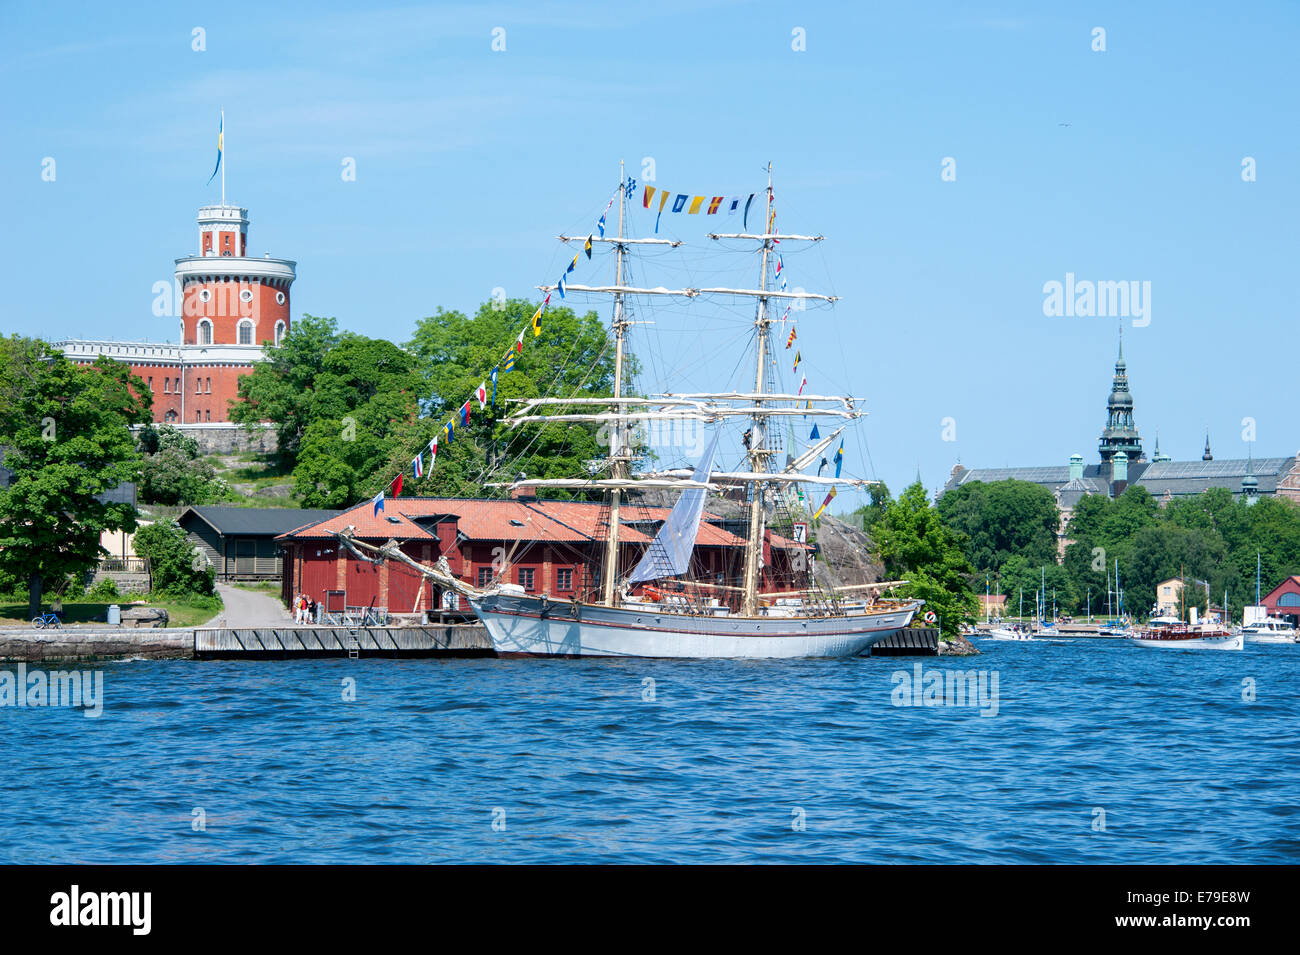 Sailboat, Djurgarden, Stockholm. Stock Photo